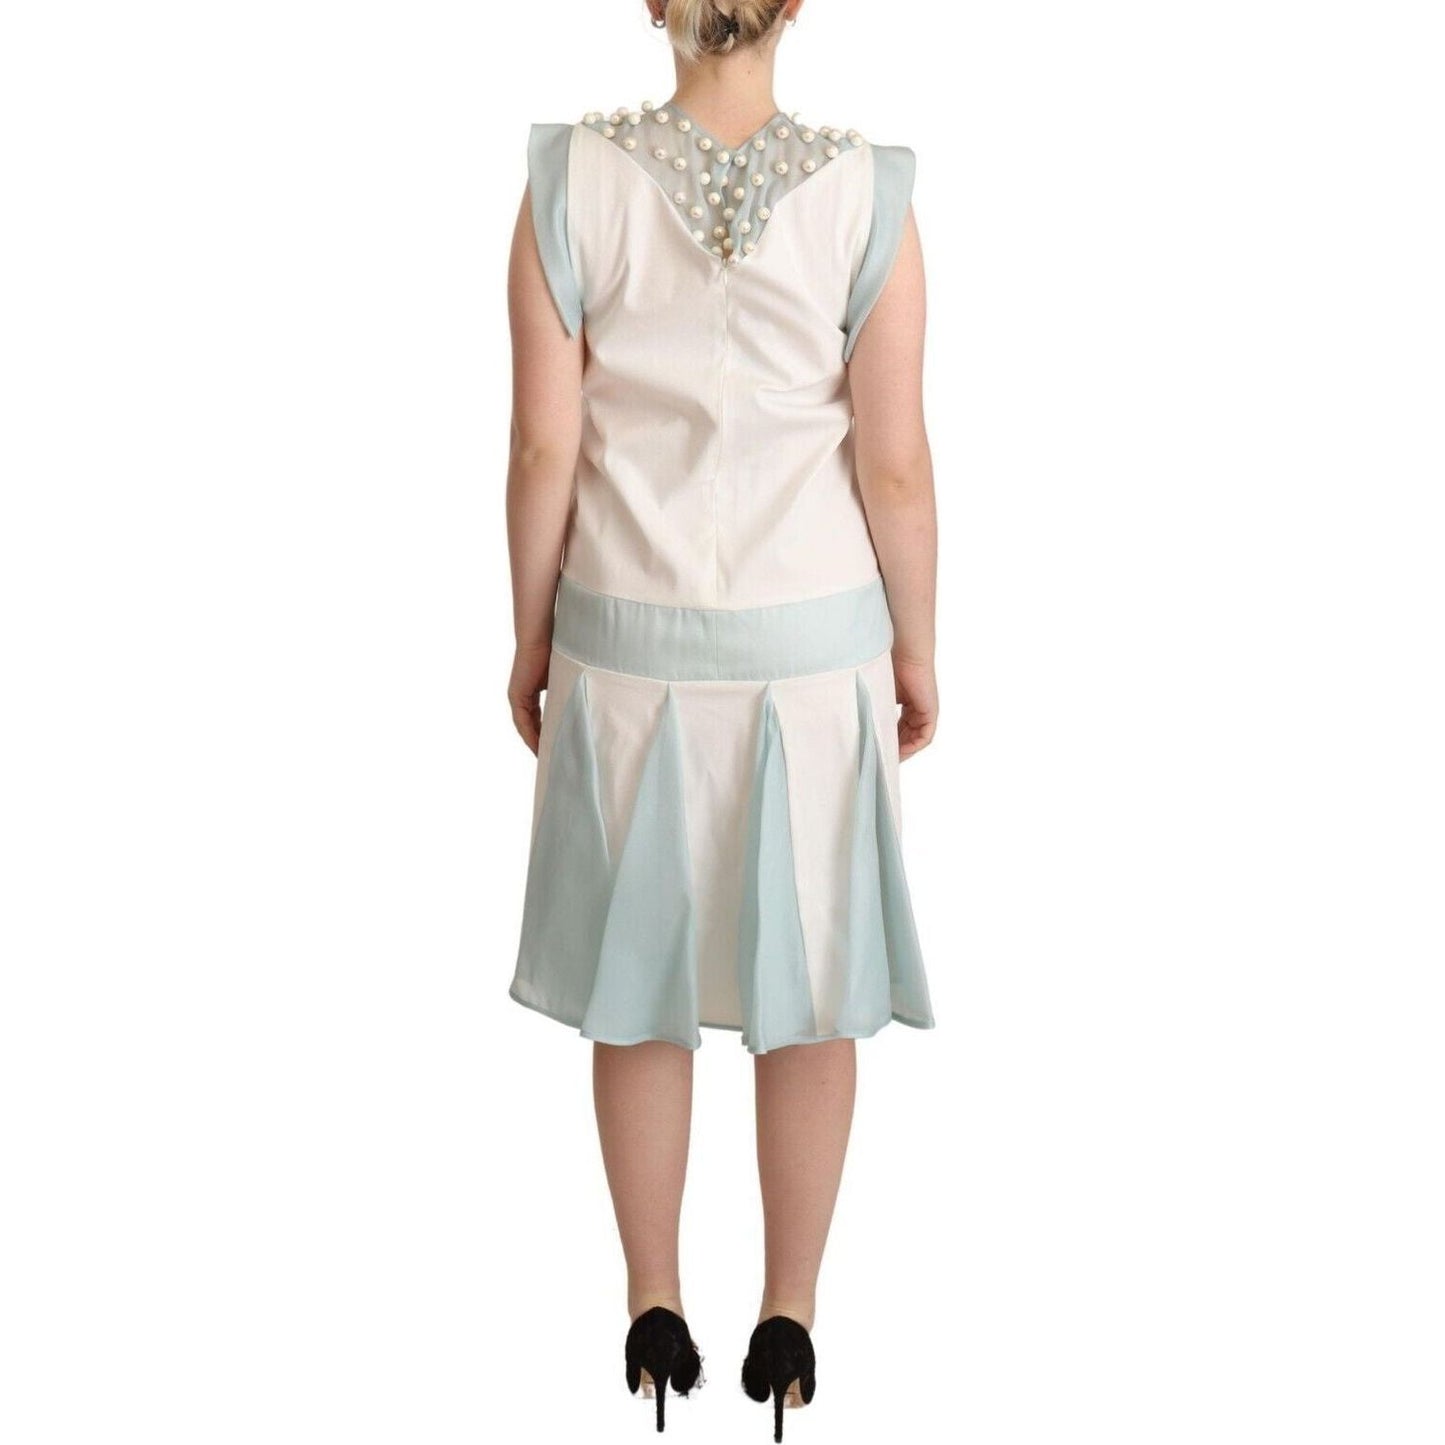 Sergei Grinko Embroidered Pearl Shift Dress Distinction multicolor-faux-pearl-sleeveless-shift-midi-dress WOMAN DRESSES s-l1600-2-90-cea436ed-7a8.jpg